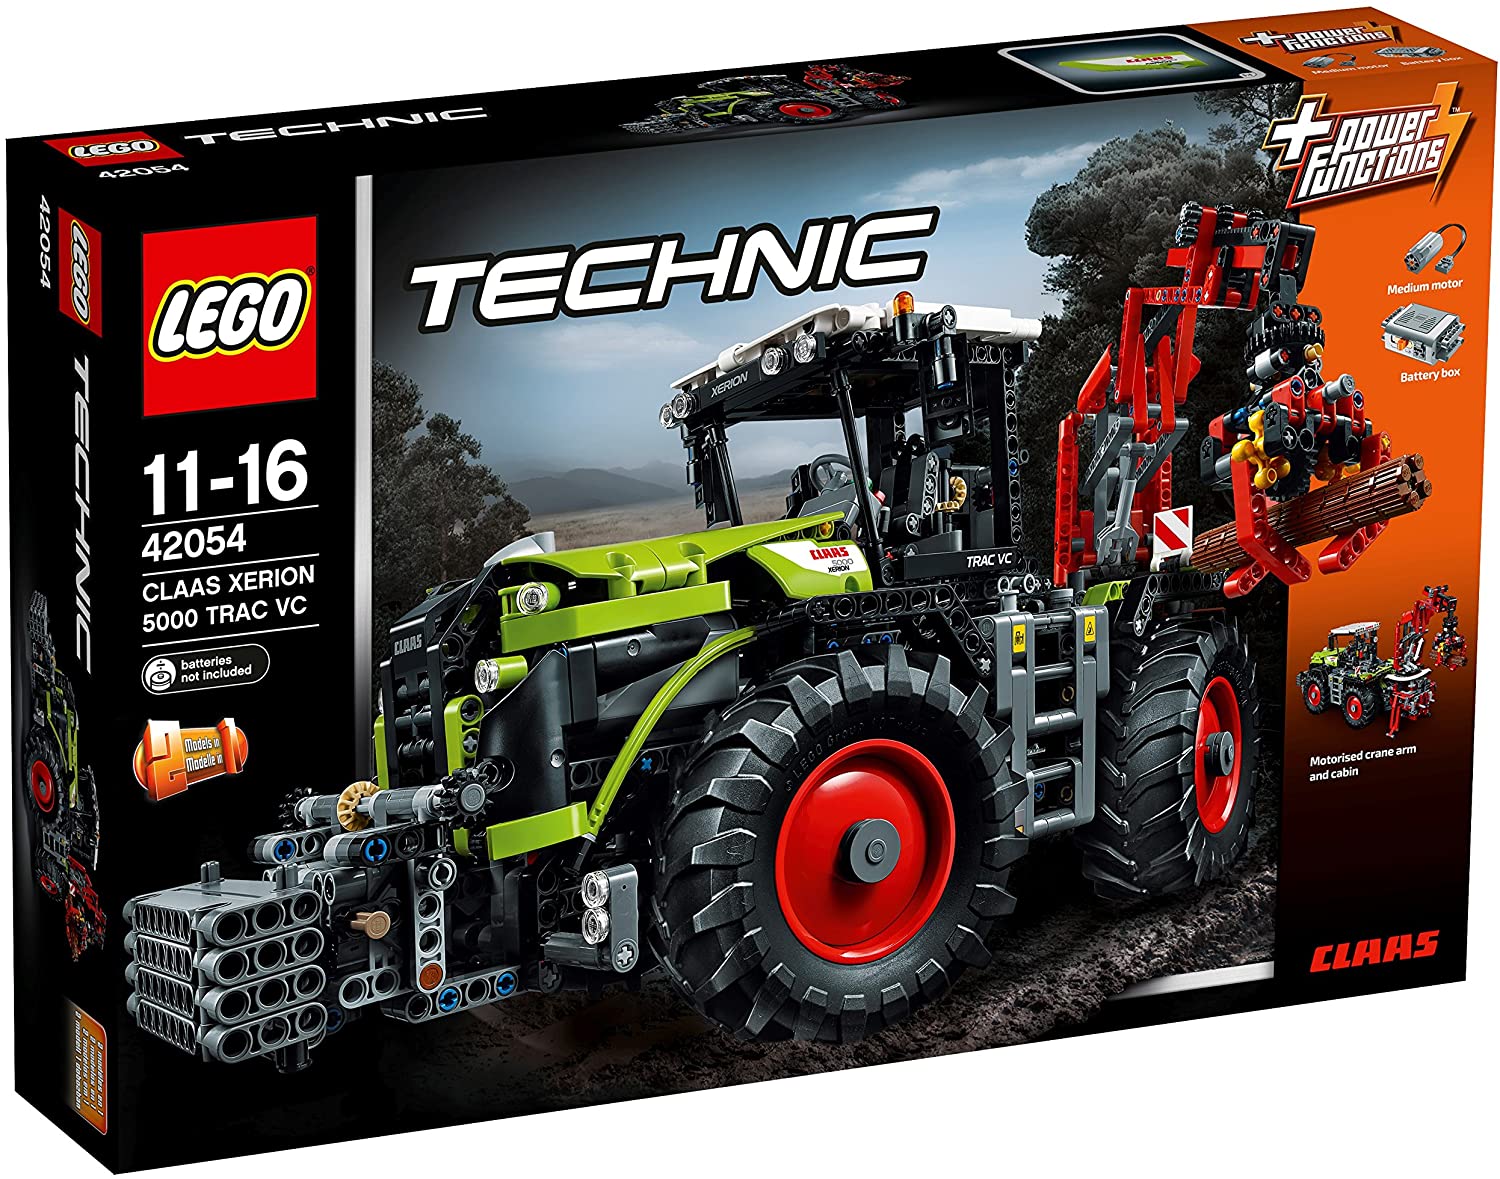 LEGO Technic CLASS XERION 5000 TRAC VC Set 42054